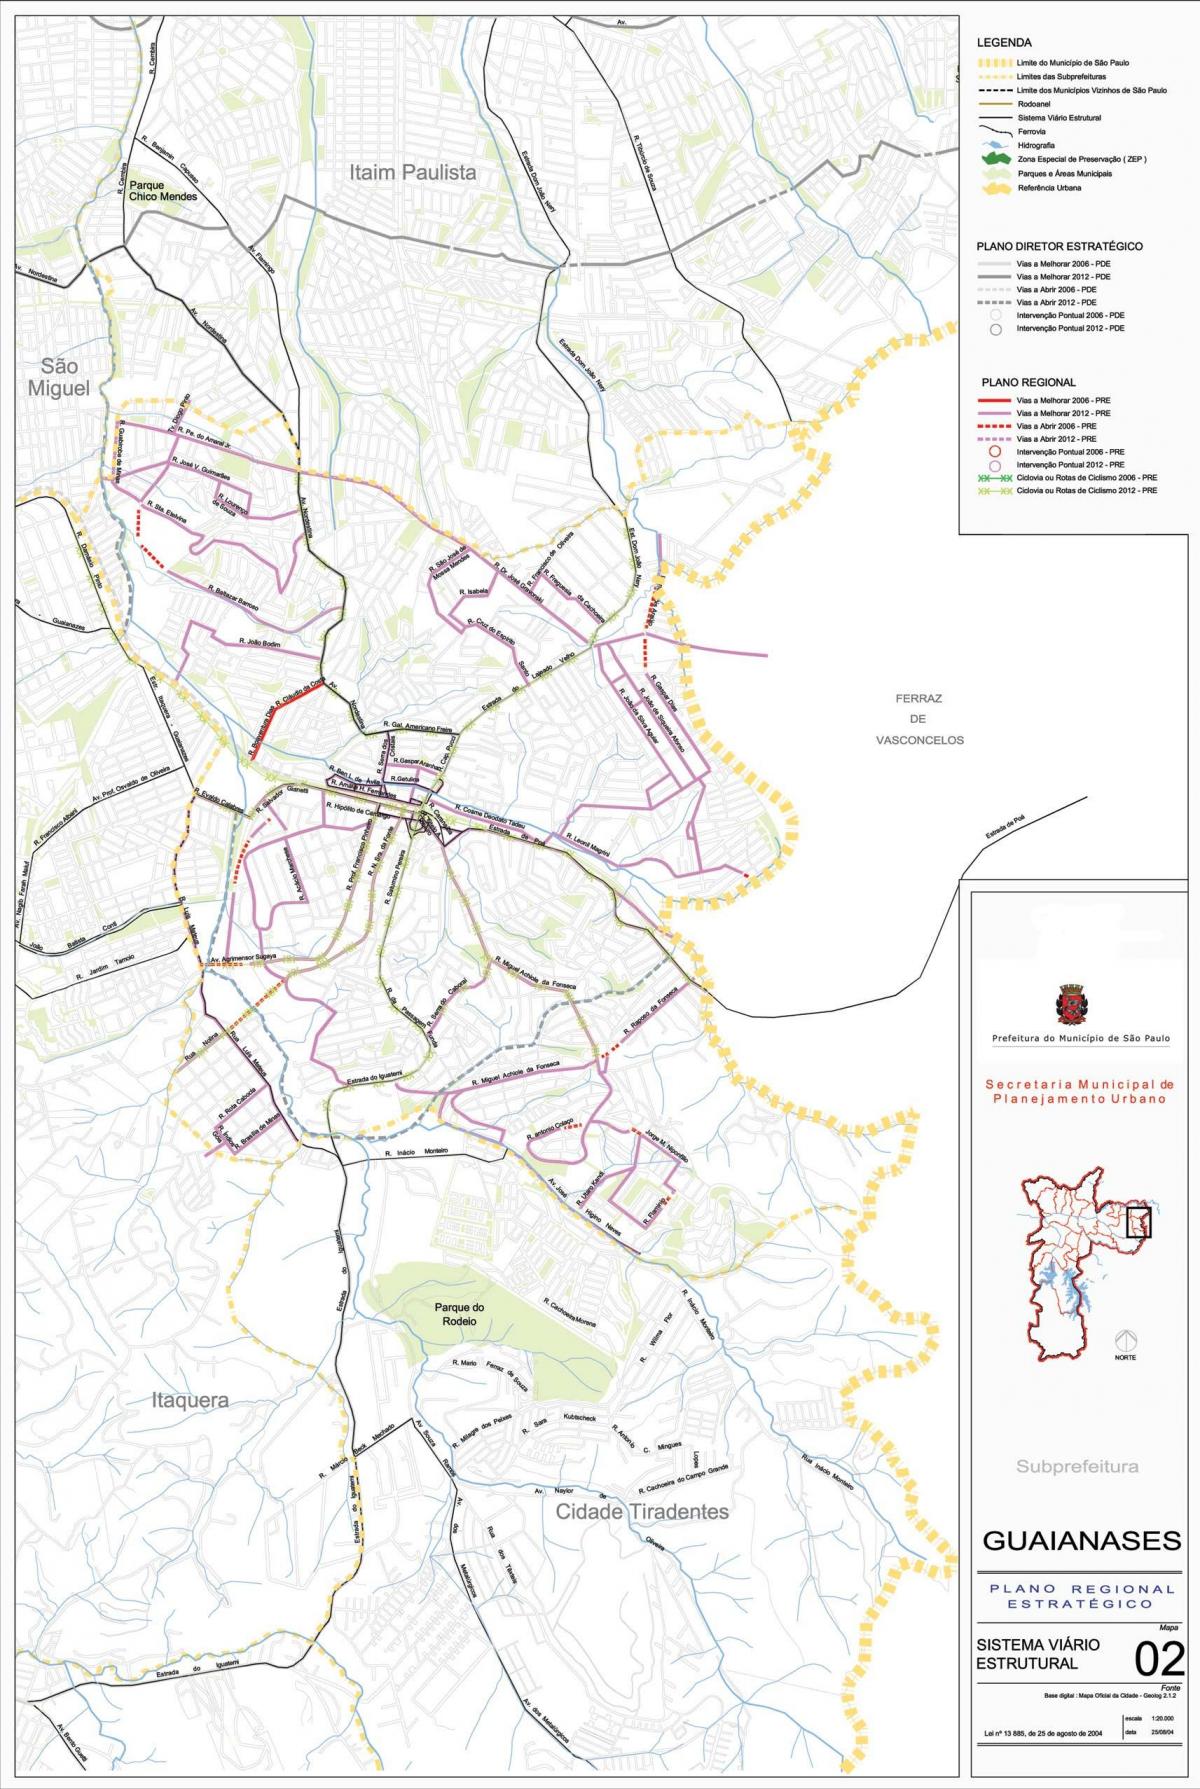 Carte Guaianases São Paulo - Routes